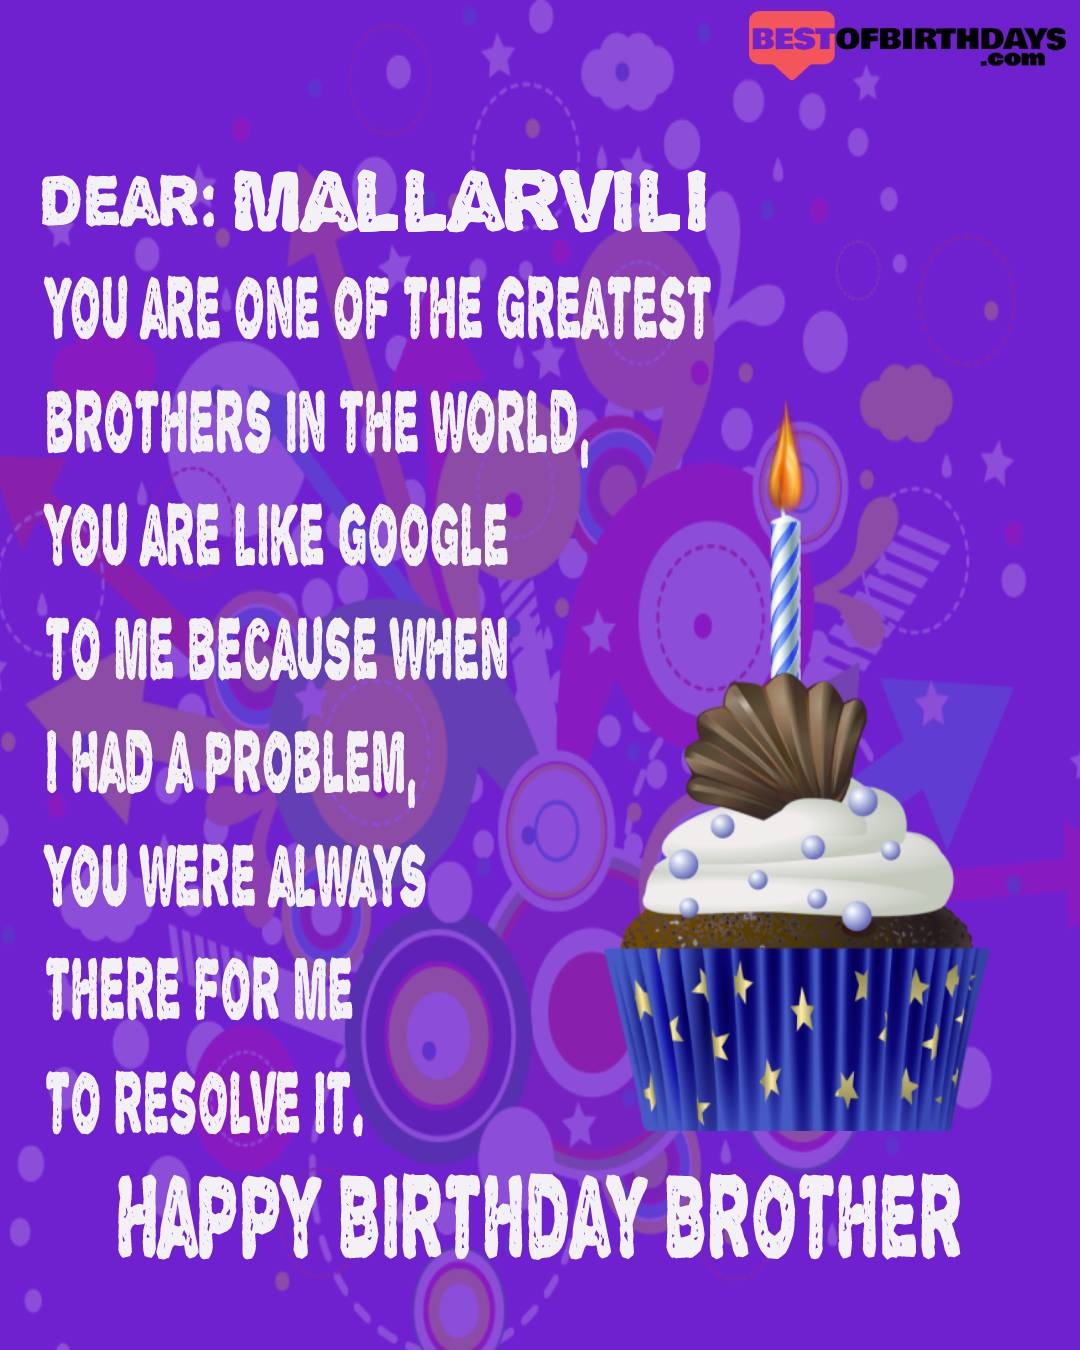 Happy birthday mallarvili bhai brother bro